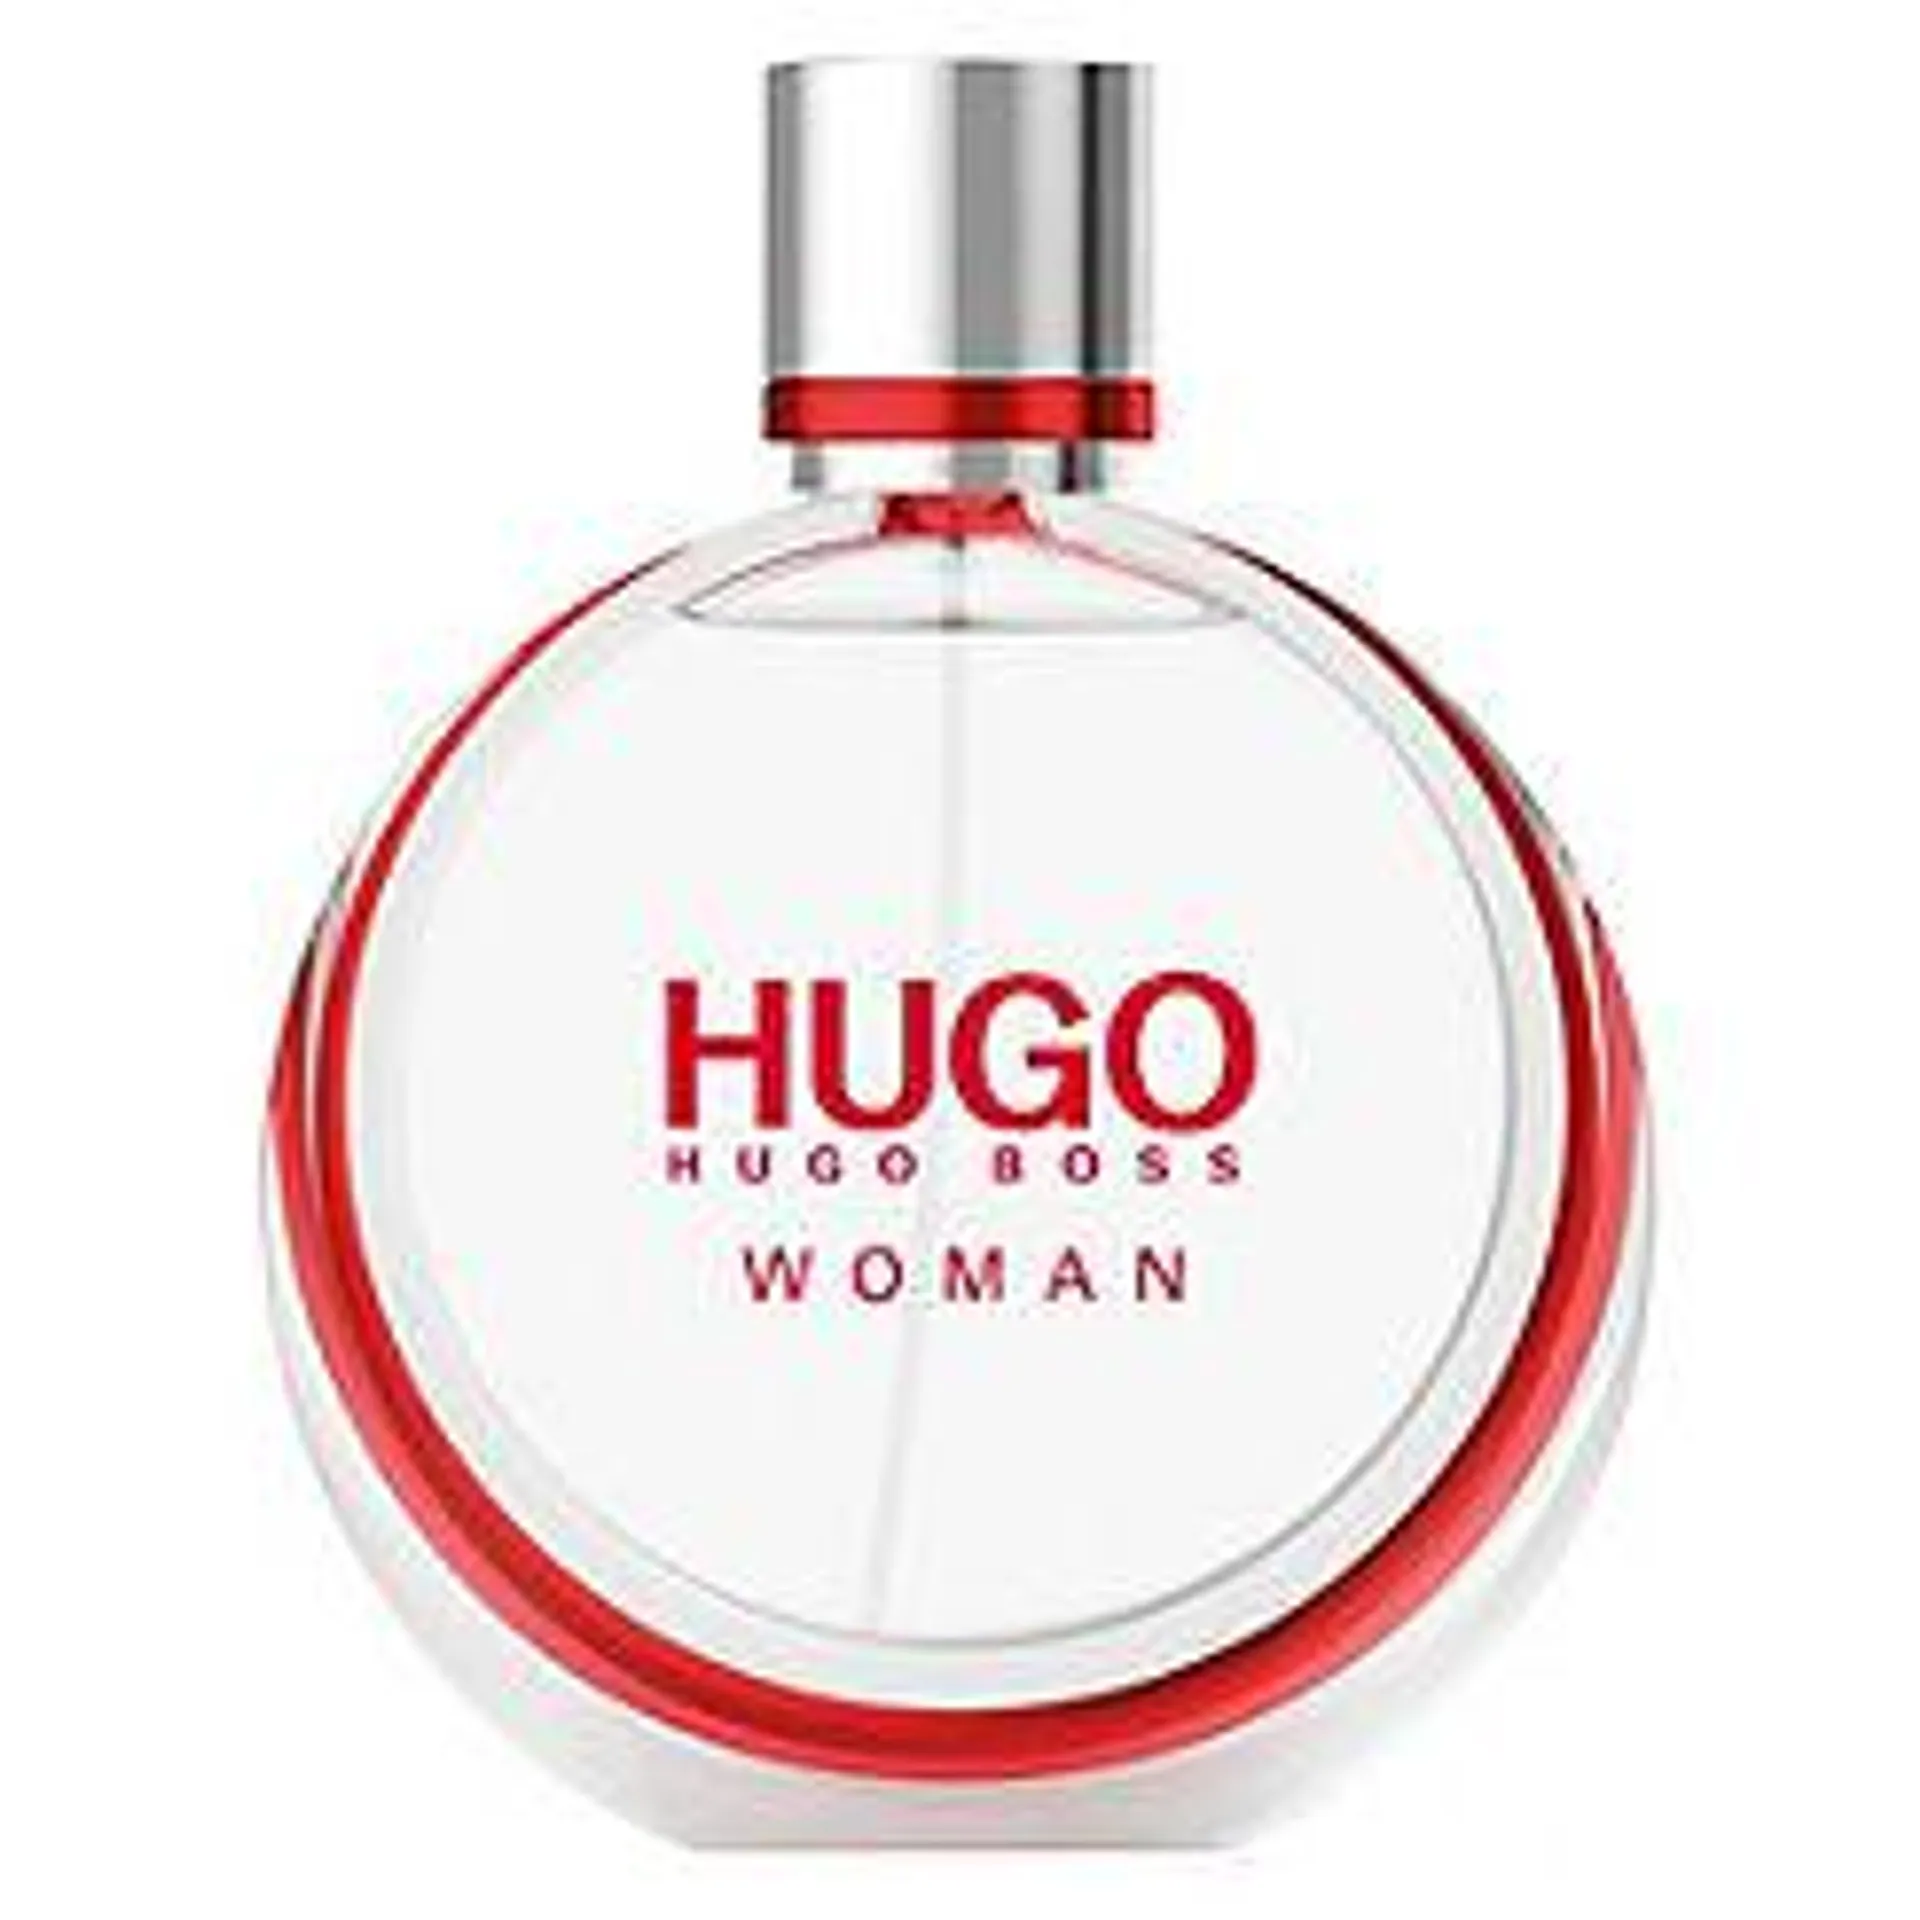 Hugo Boss Woman Eau de Parfum